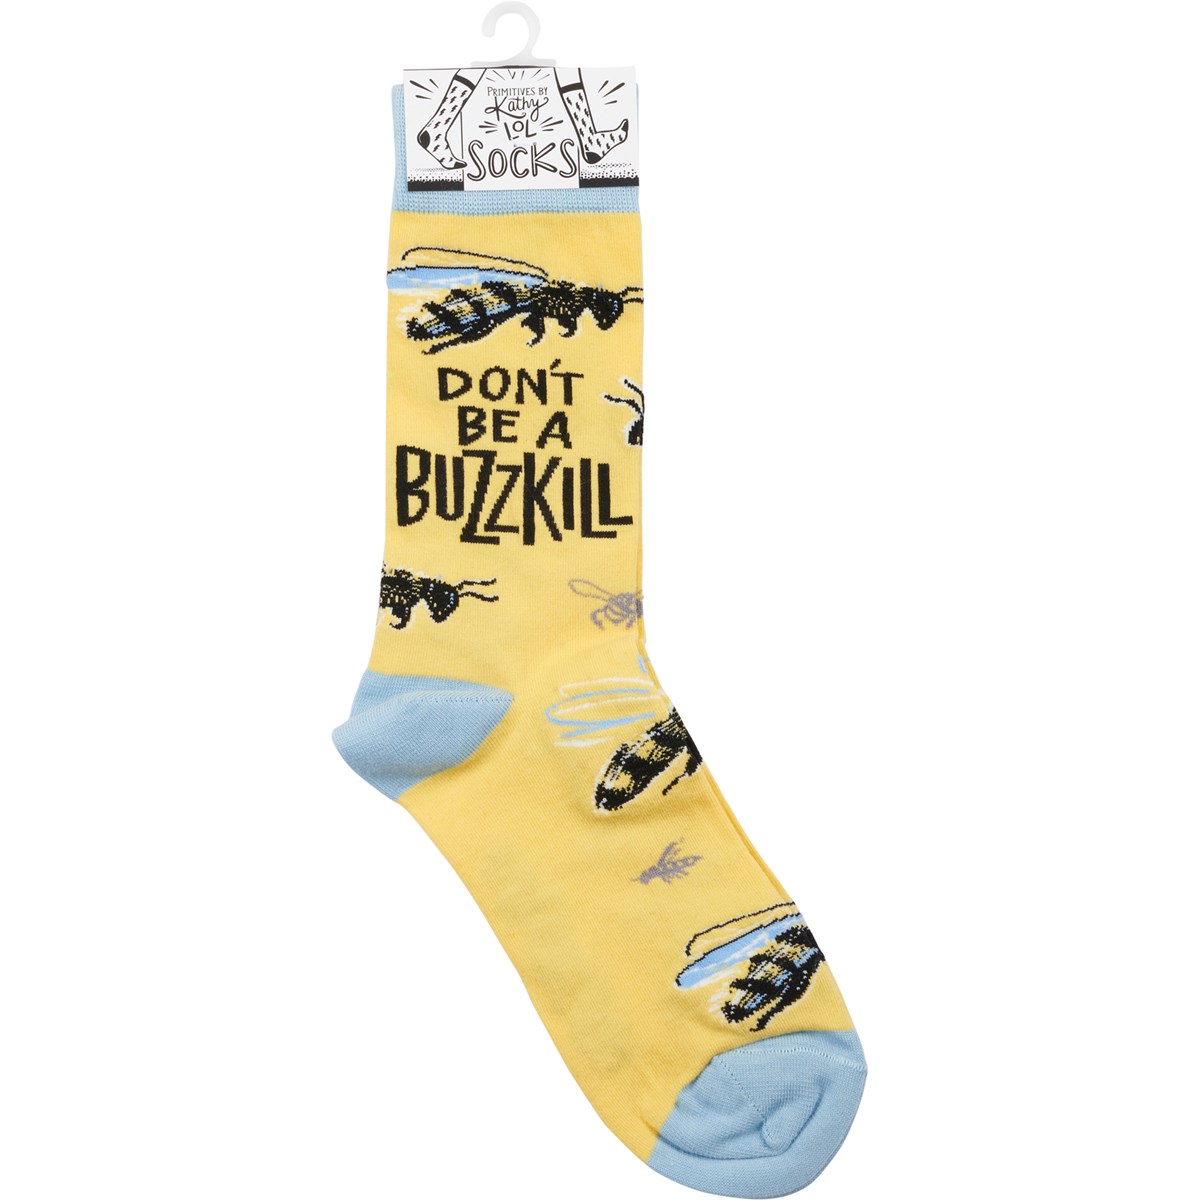 Don't Be A Buzzkill Socks - Cotton, Nylon, Spandex